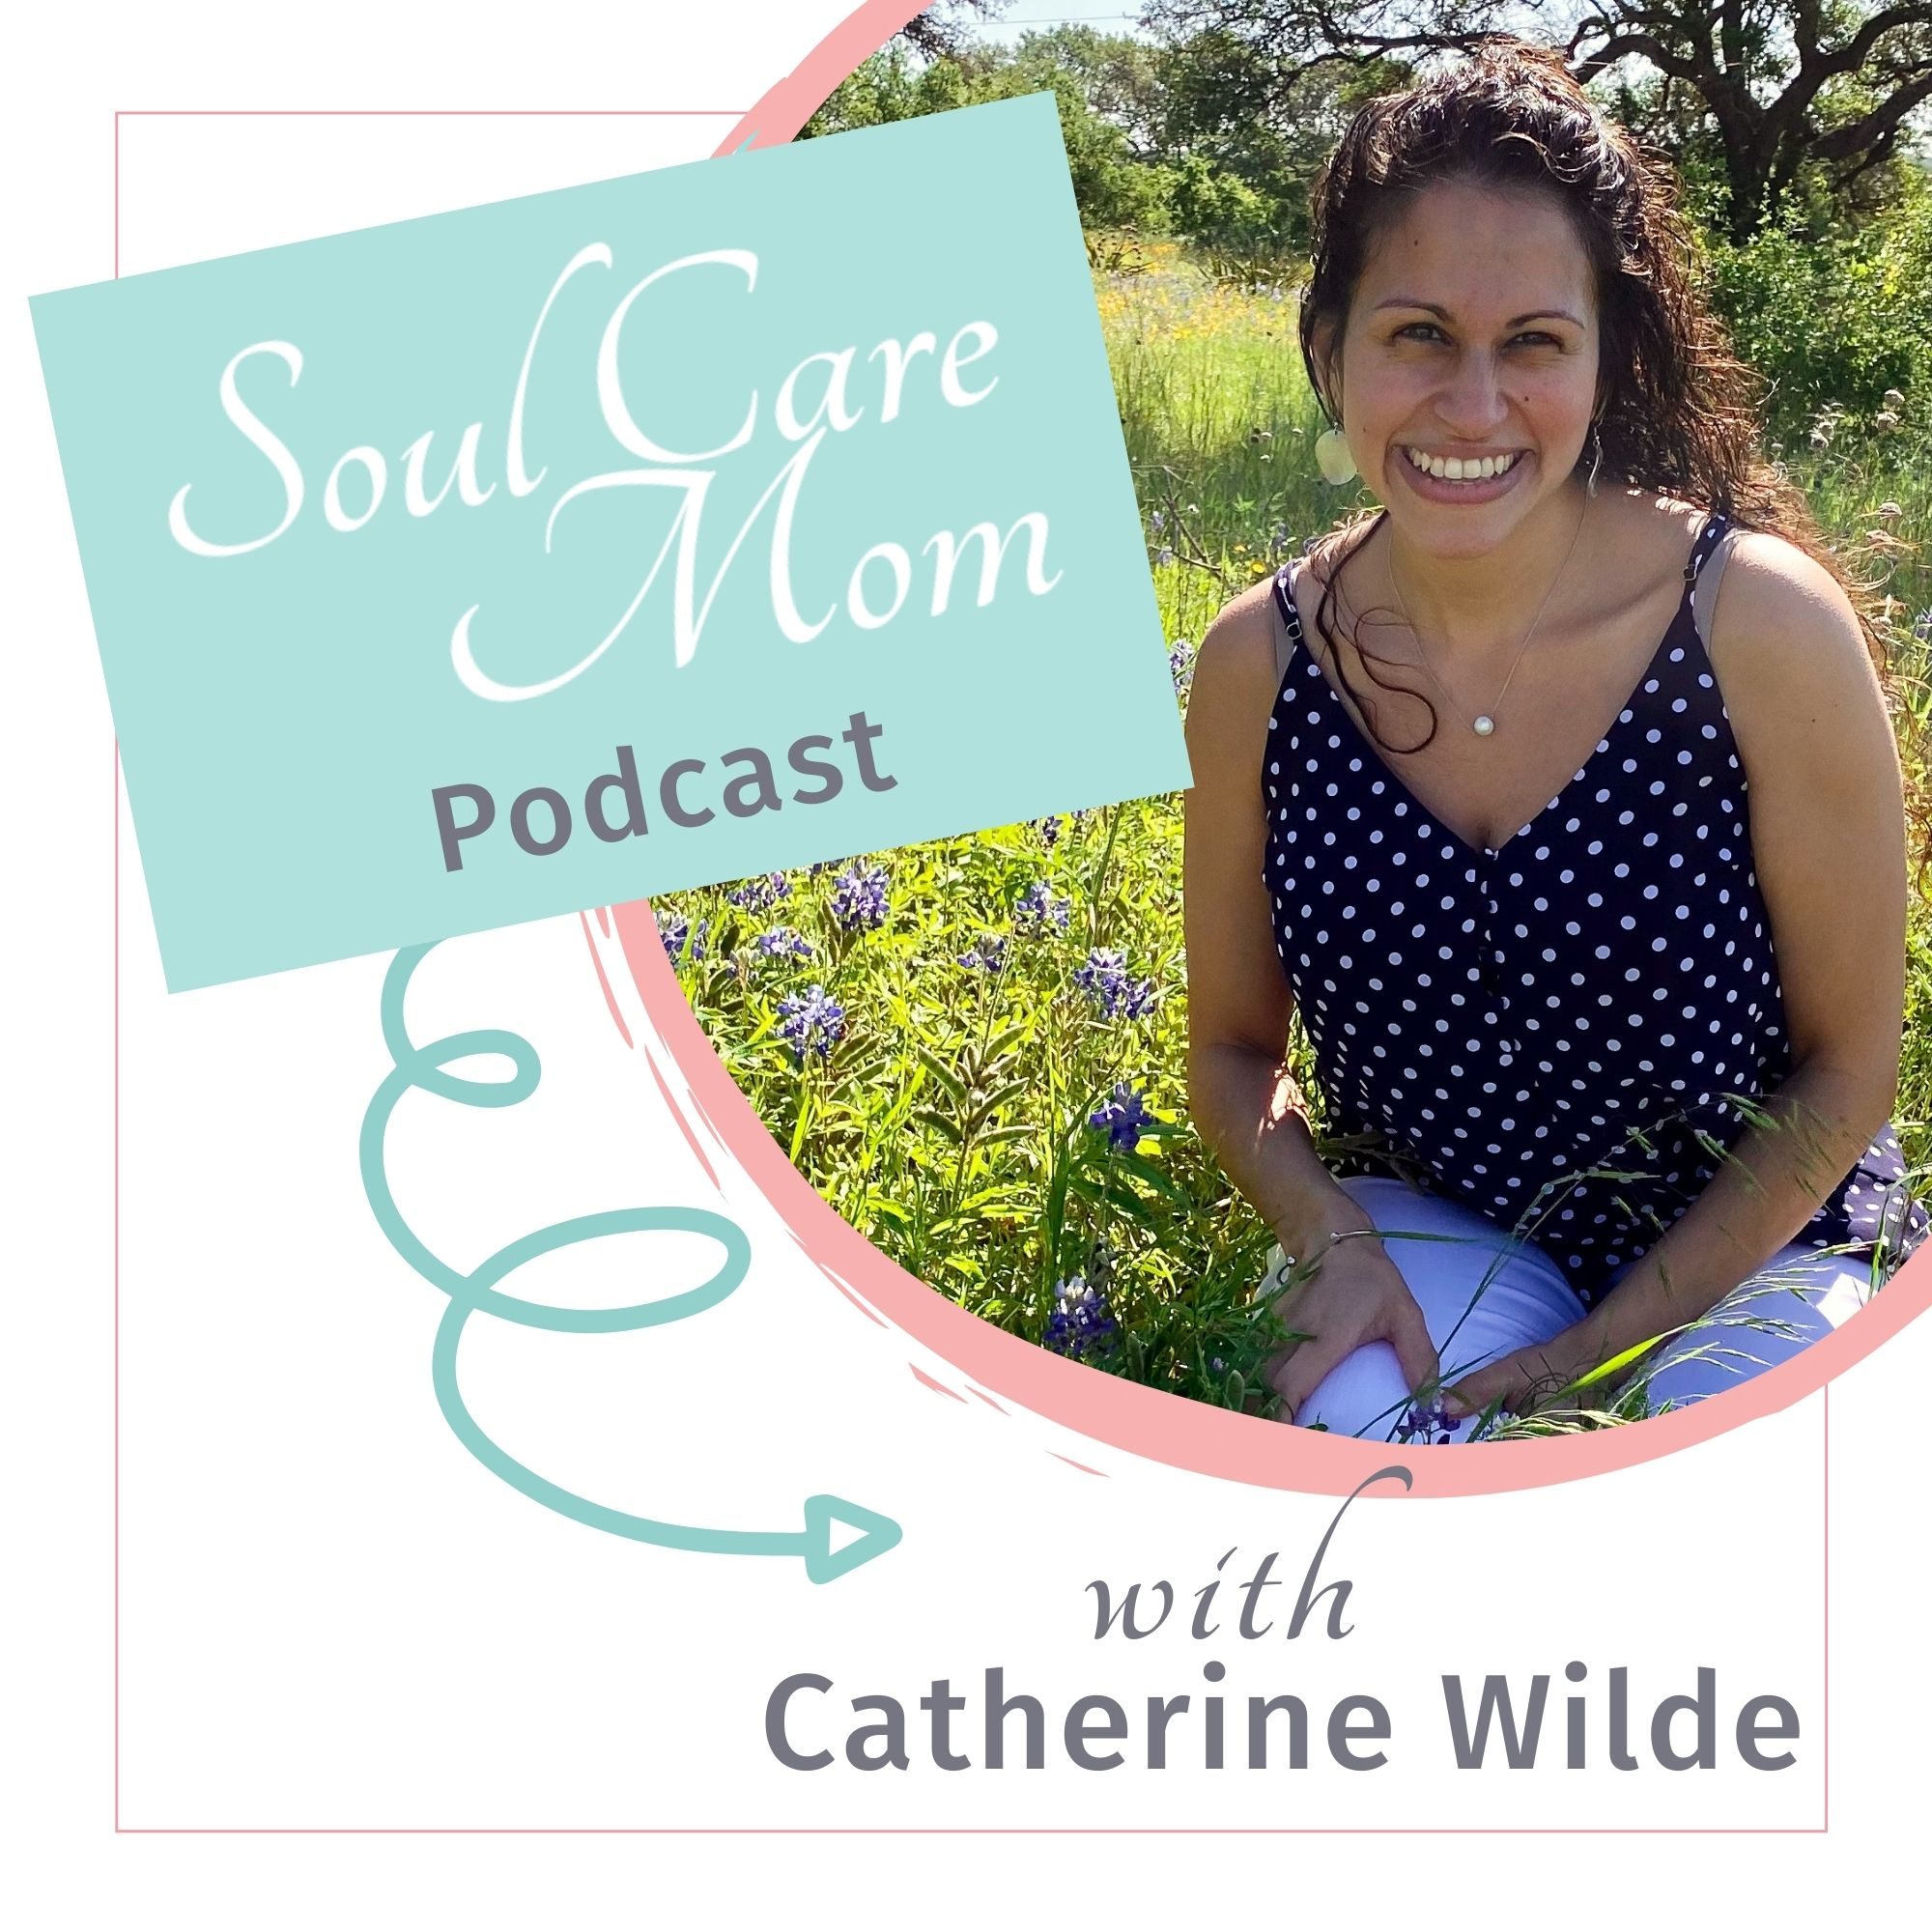 Soul Care Mom Podcast